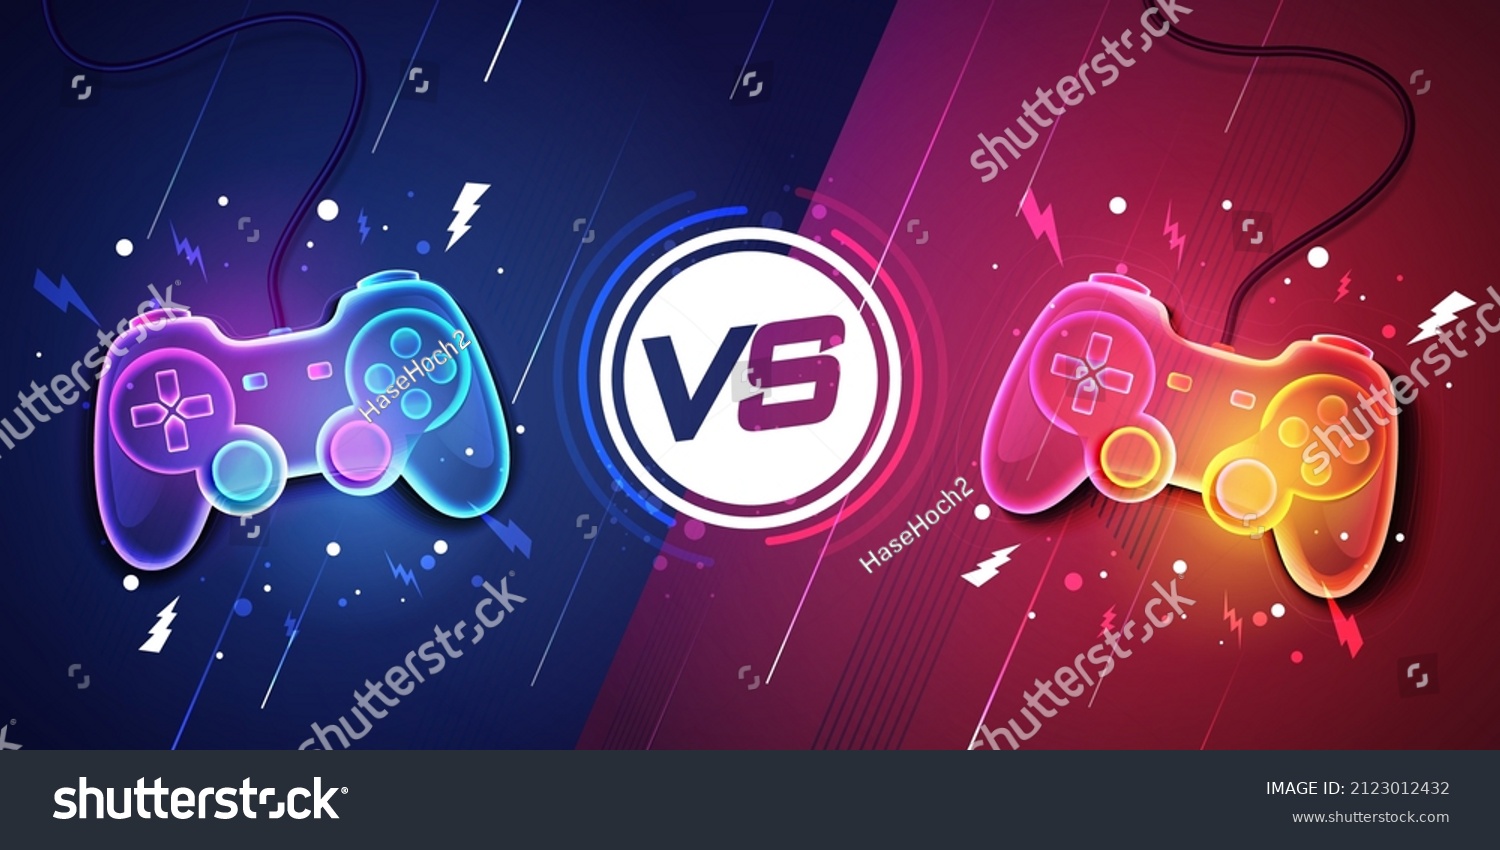 SVG of Player Versus Concept. Game Or Esport Battle. svg